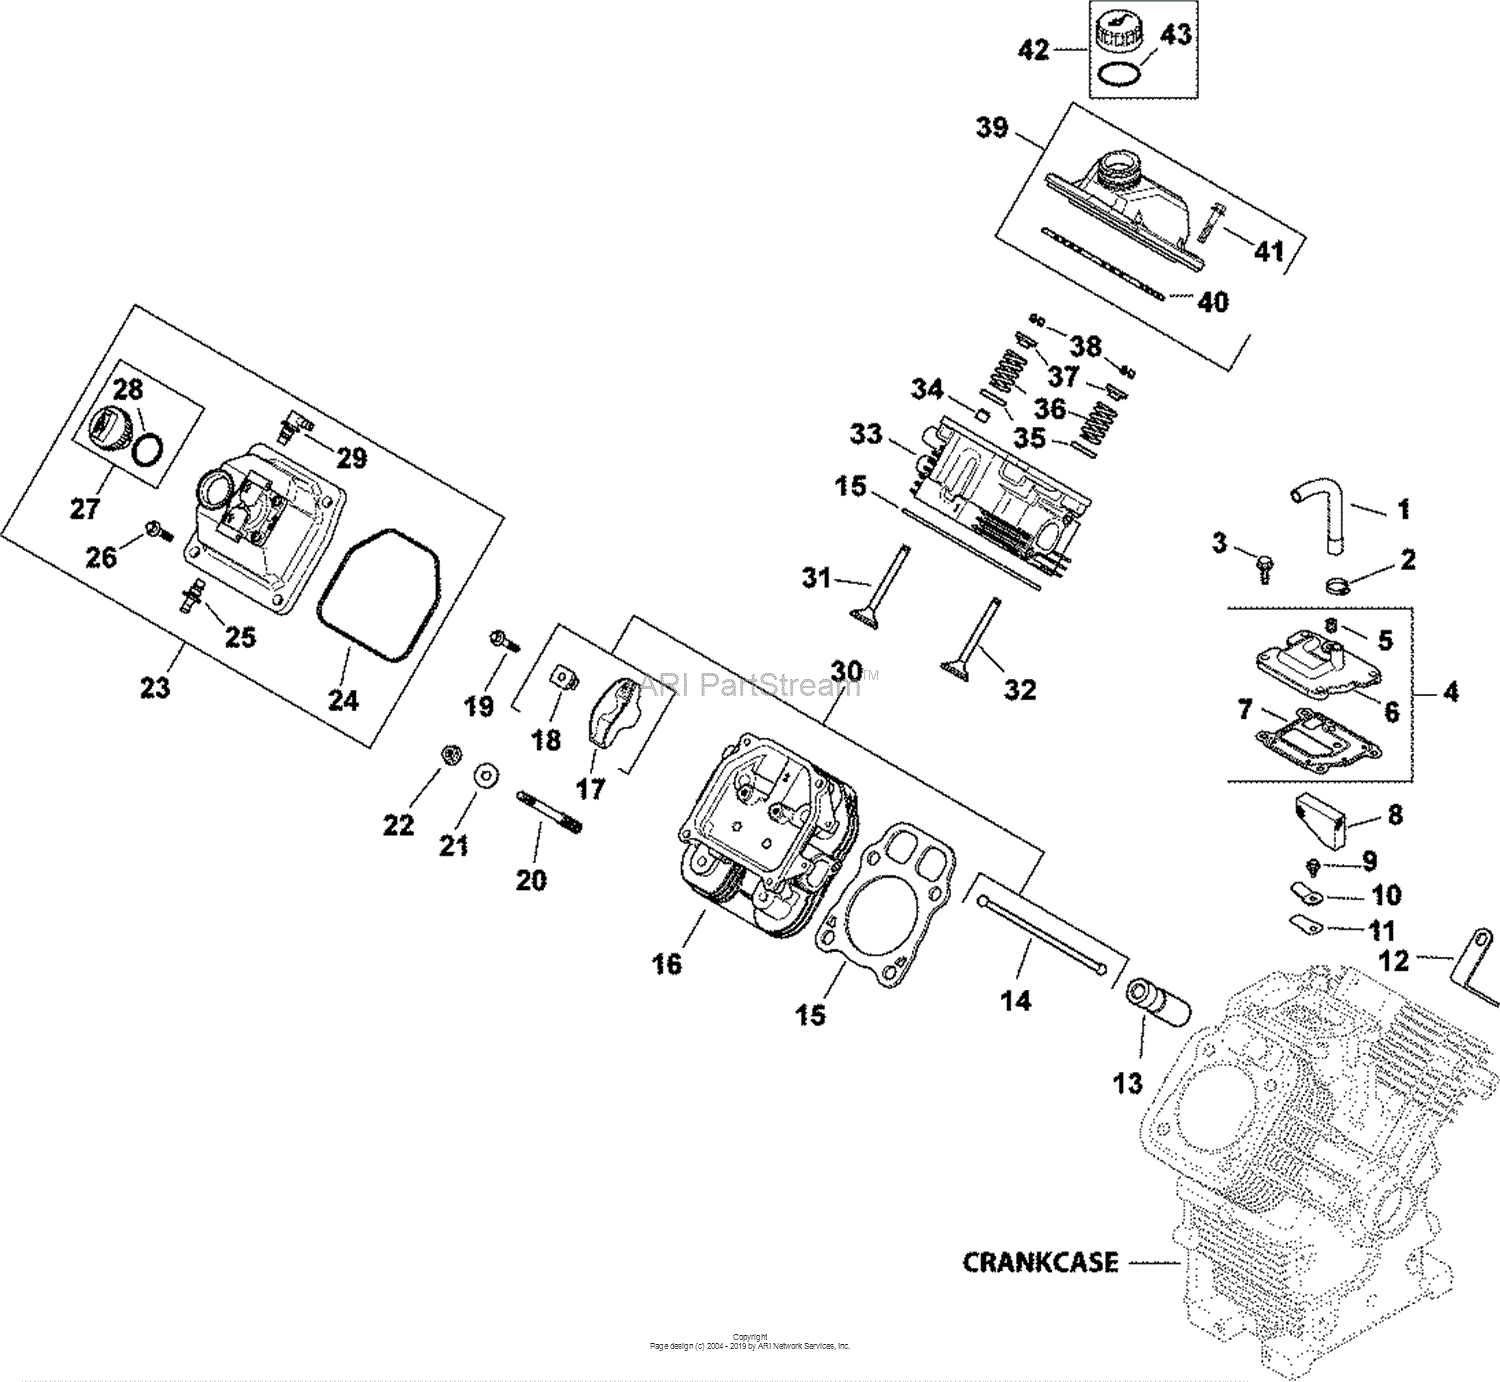 Kohler Ch25s Parts Diagram - General Wiring Diagram